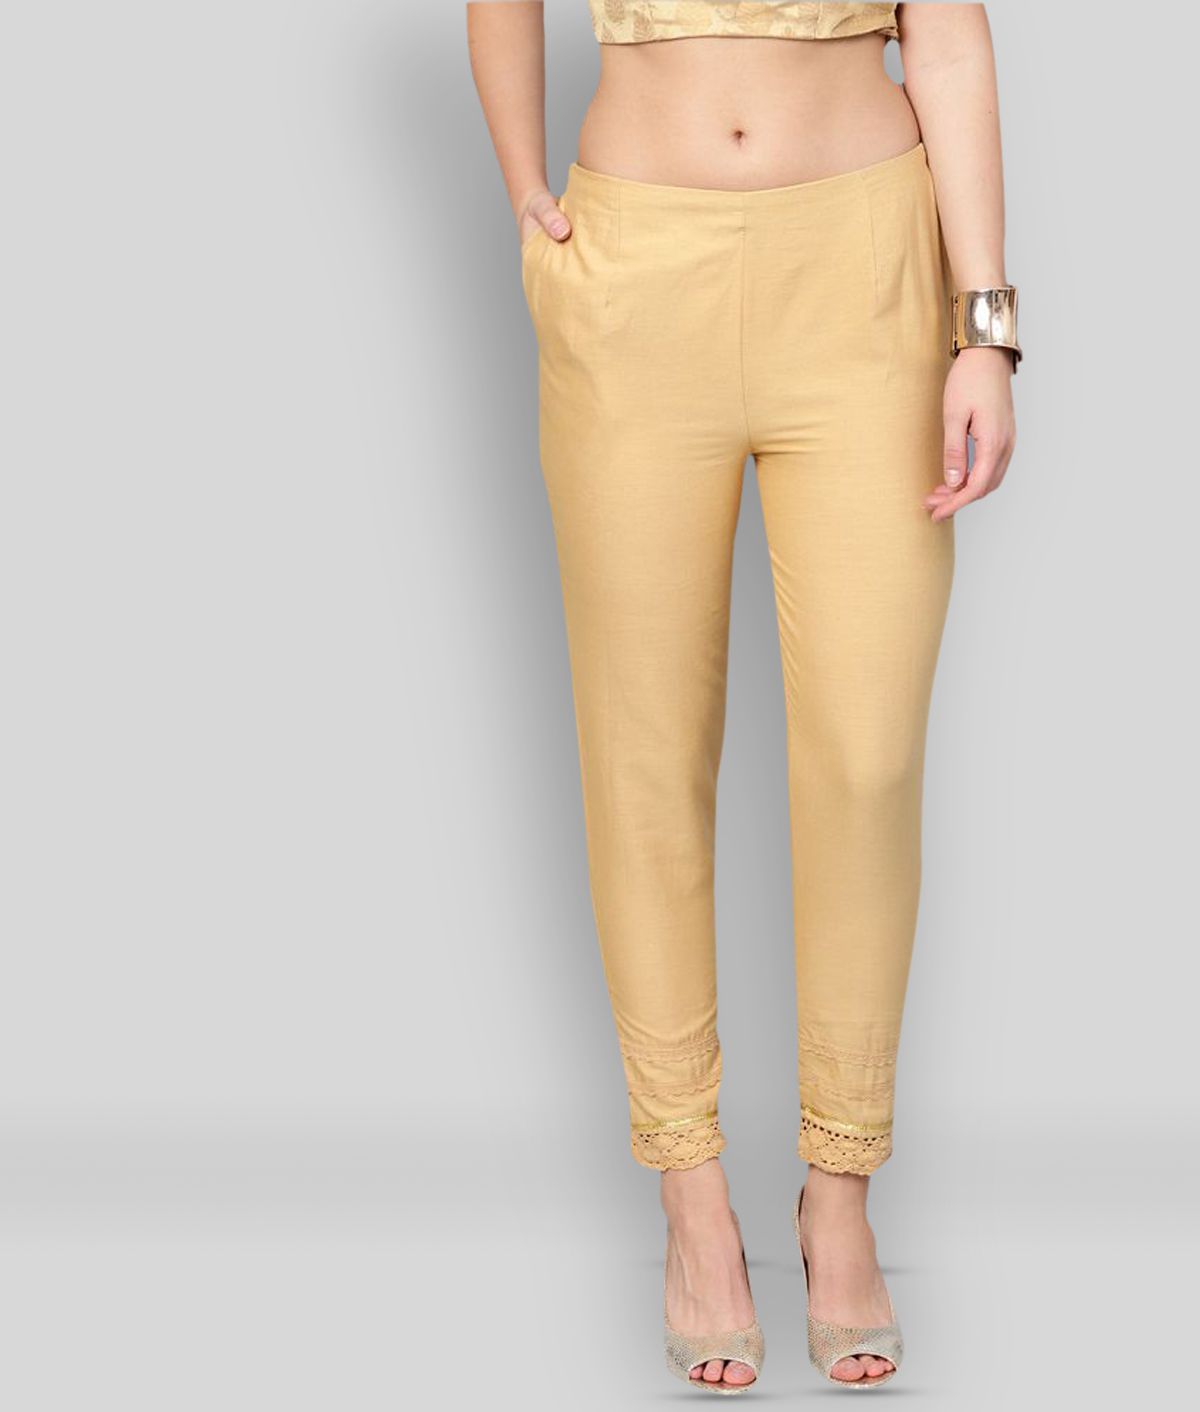     			Juniper - Gold Cotton Slim Fit Women's Casual Pants  ( Pack of 1 )